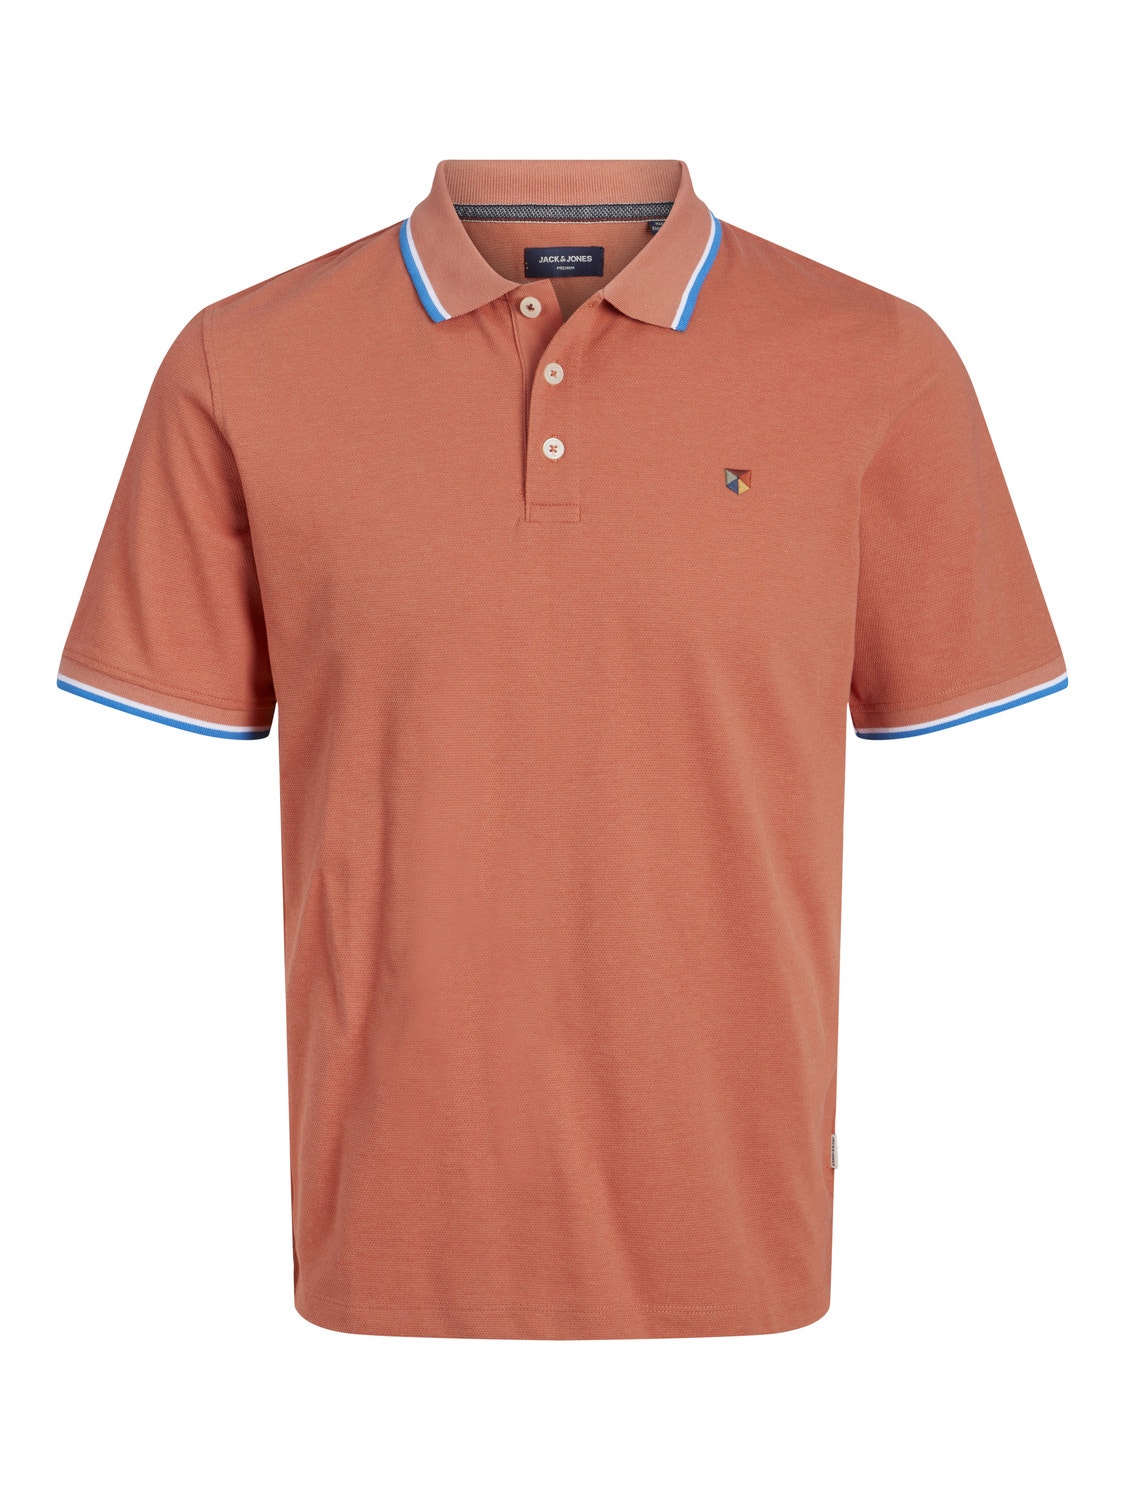 Jack & Jones Plain Polo T-shirt -Apricot Brandy - 12169064